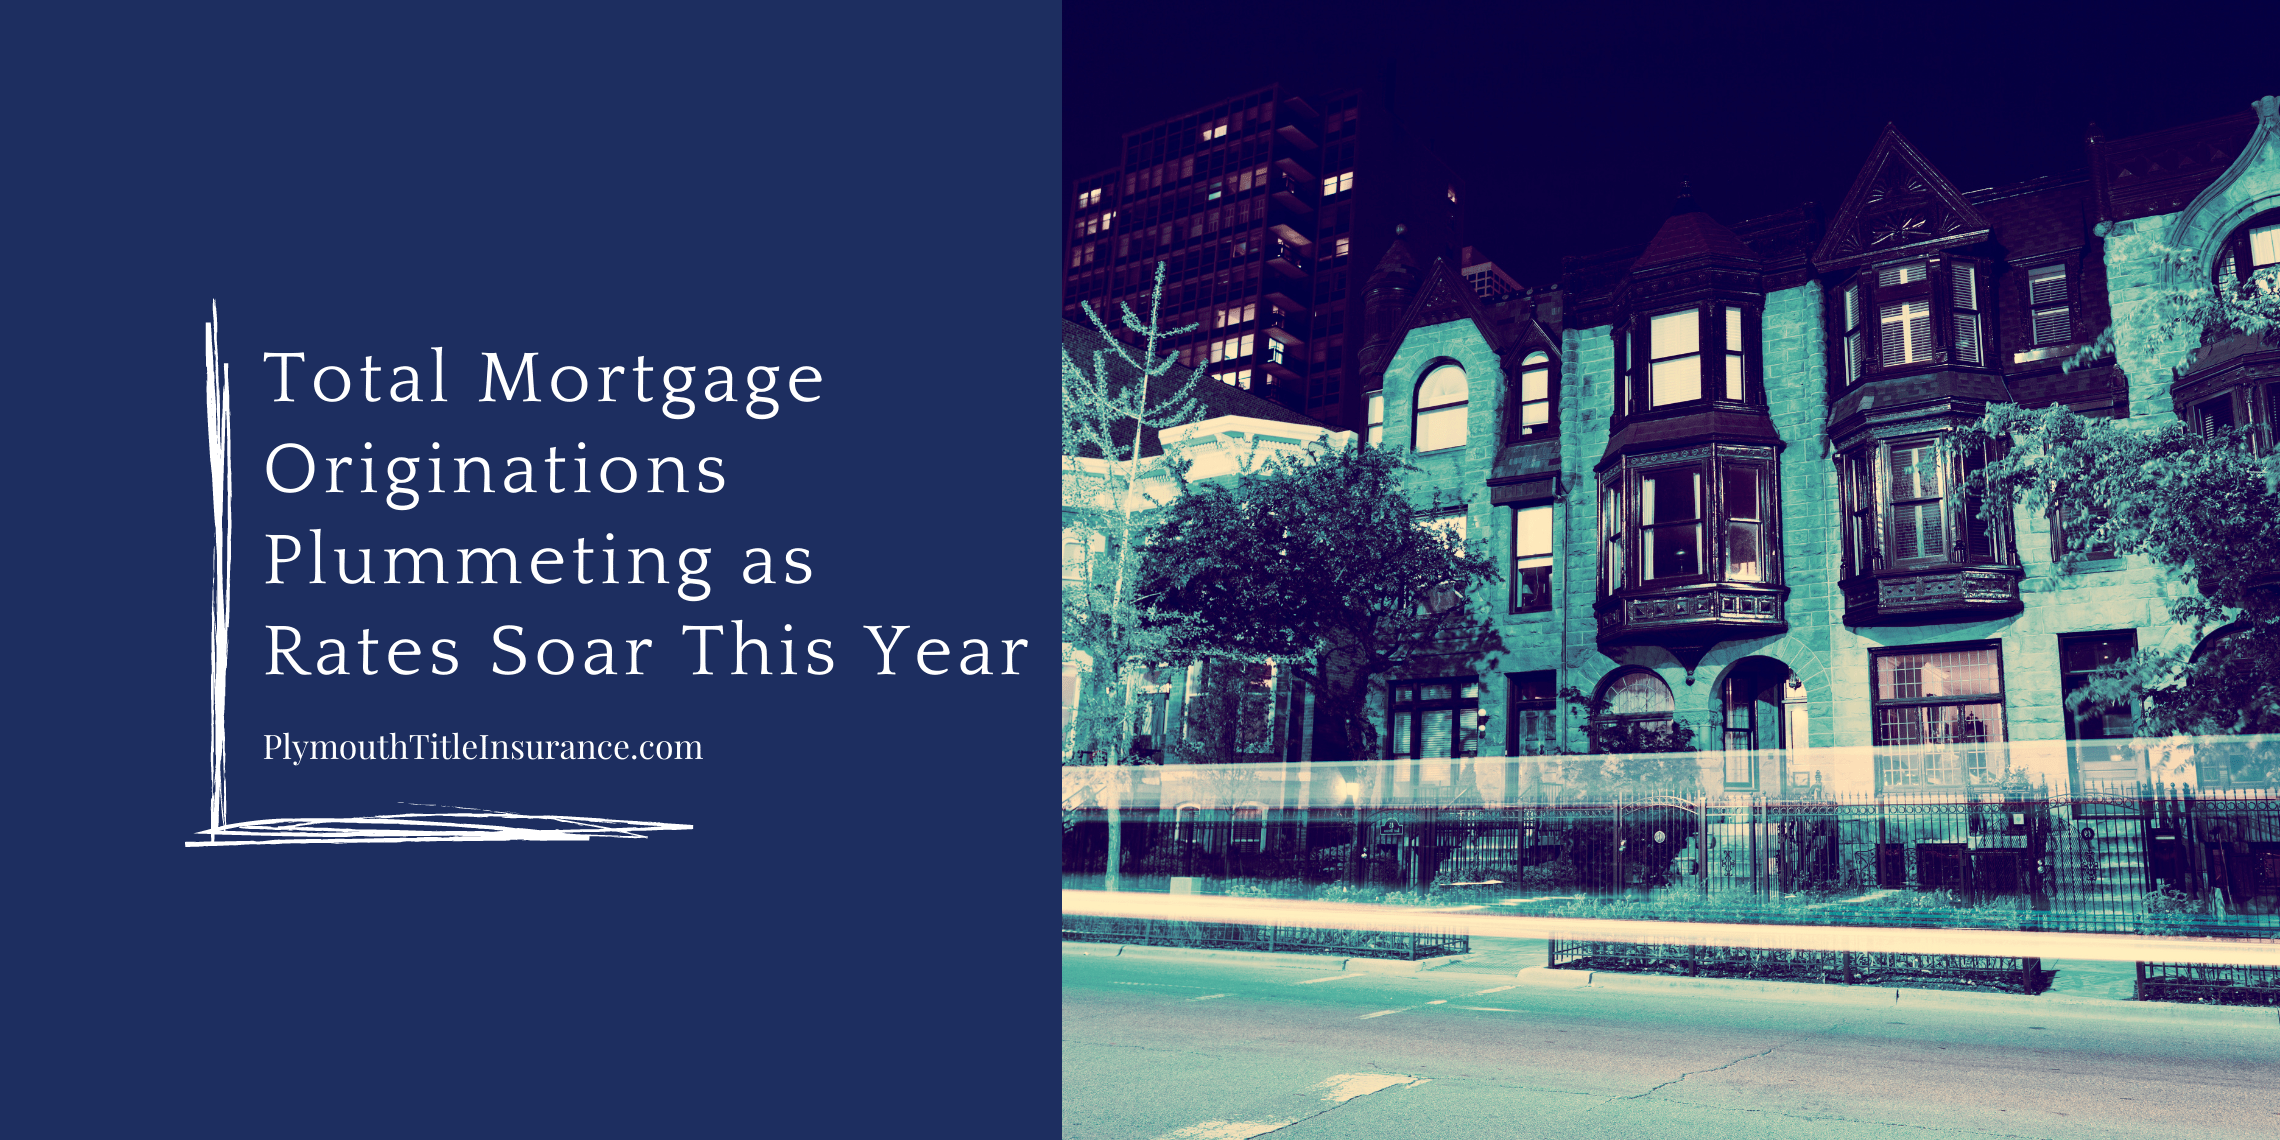 Total Mortgage Originations Plummeting as Rates Soar This Year